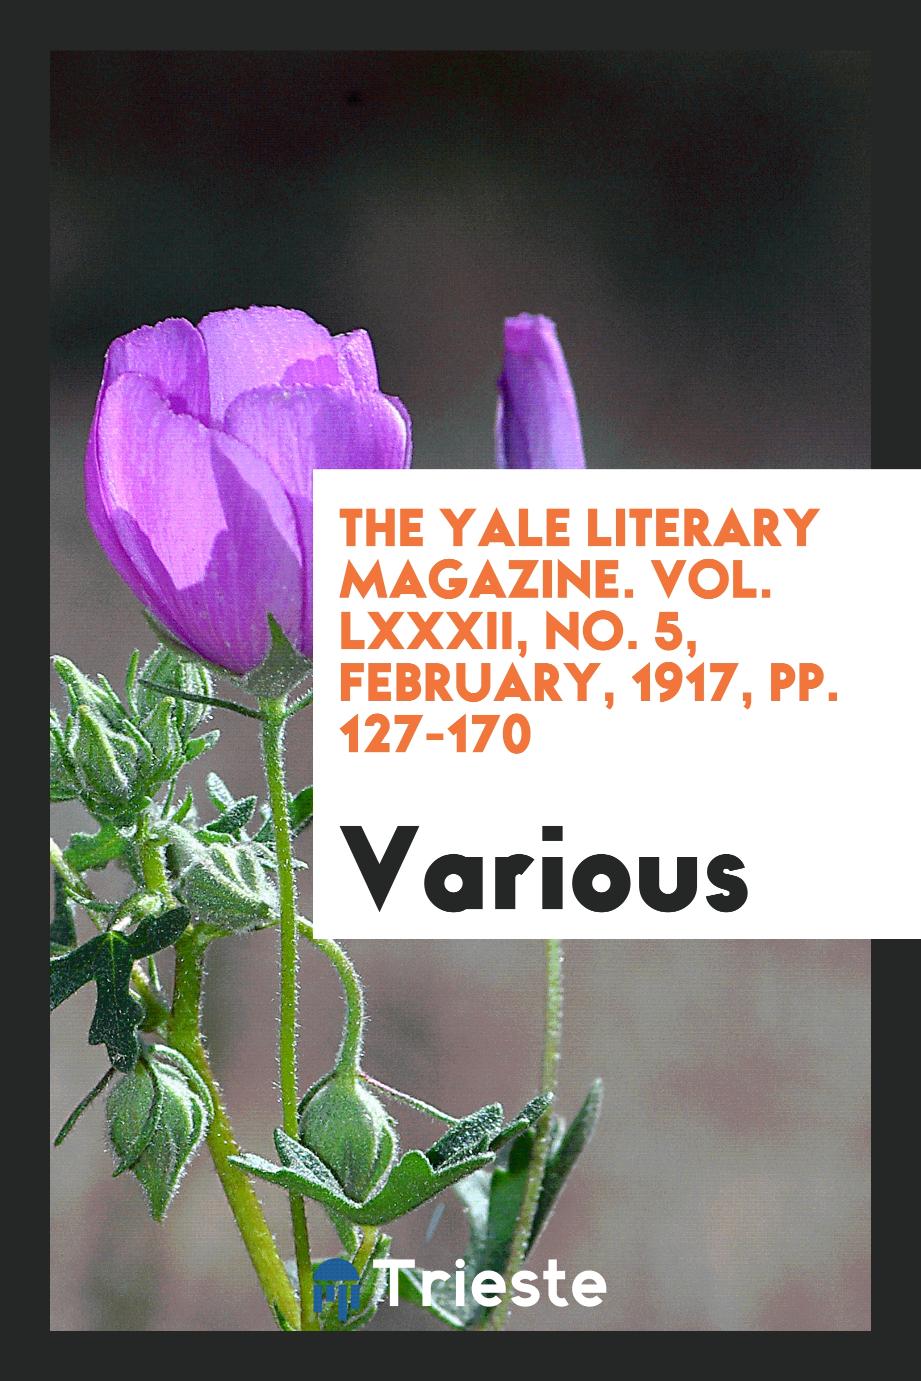 The Yale literary magazine. Vol. LXXXII, No. 5, February, 1917, pp. 127-170